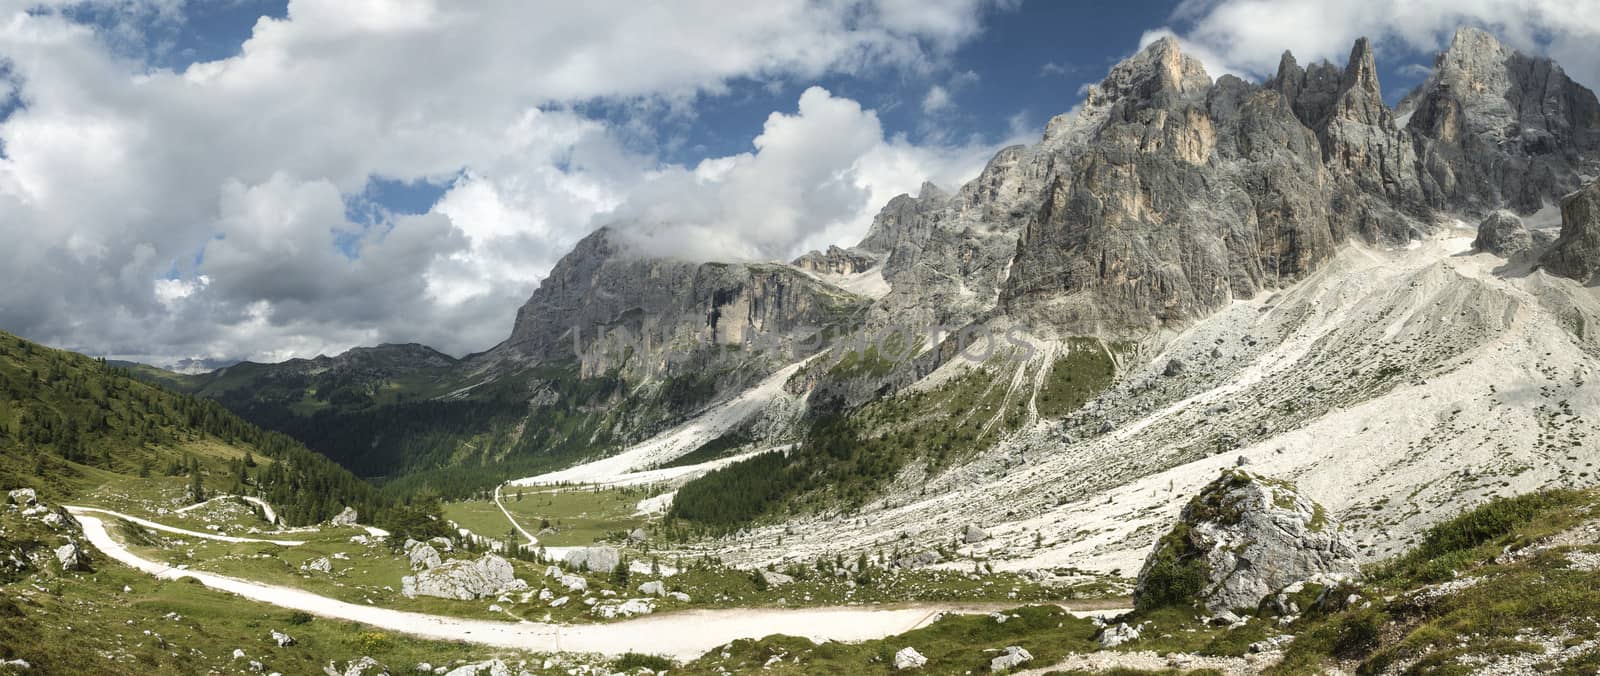 Dolomiti, Val Venegia panorama with views of Mount Mulaz and Pale di San Martino